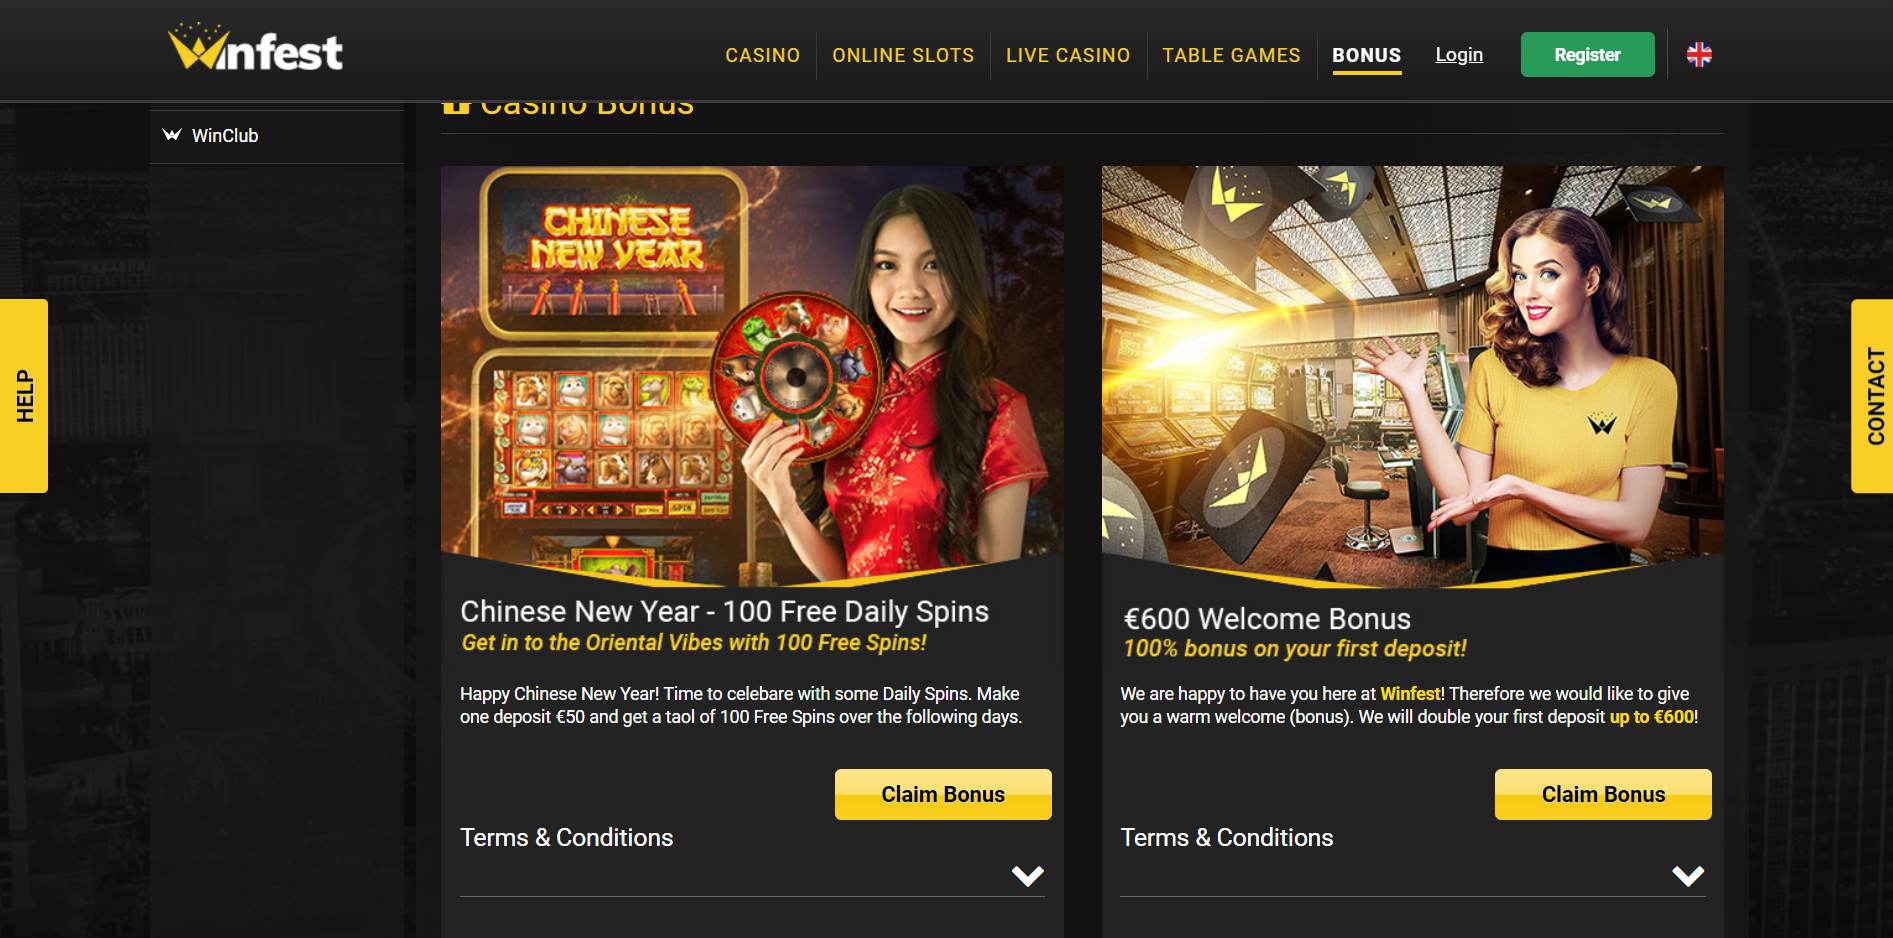 Winfest Casino No Deposit Bonus